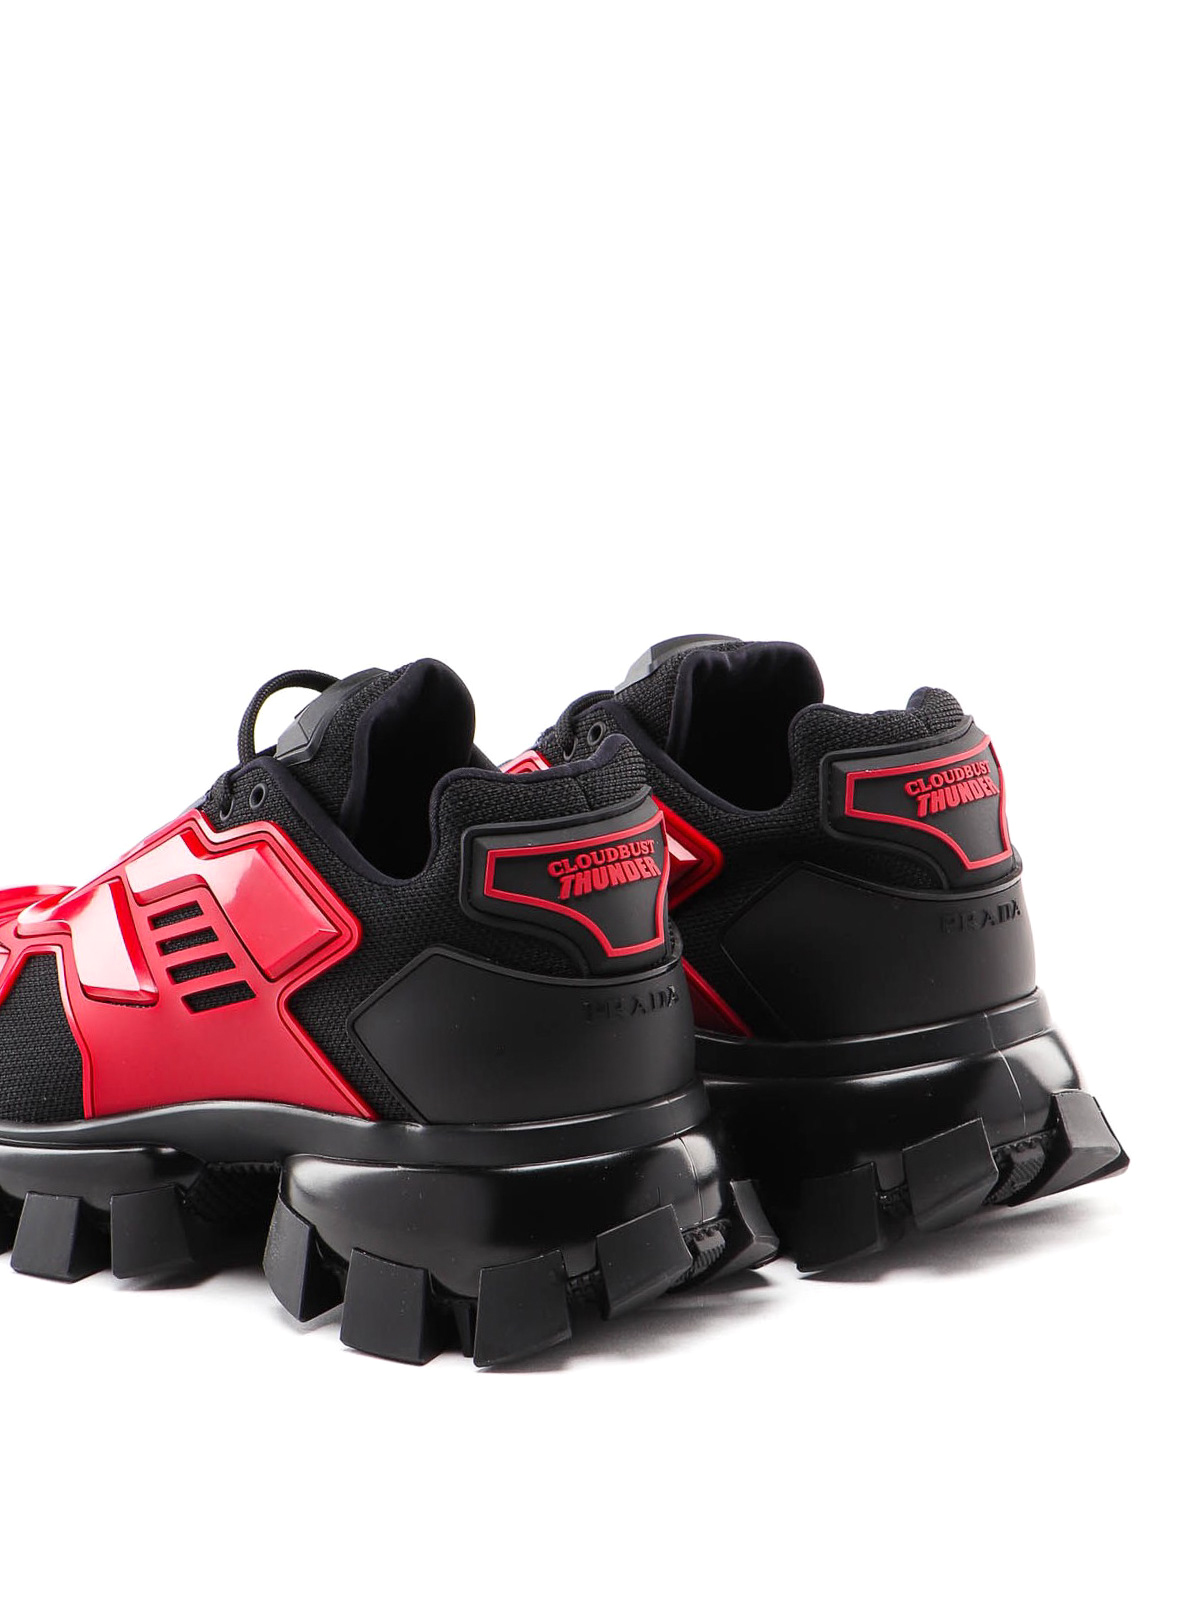 Trainers Prada - Cloudbust Thunder red sneakers - 2EG2933KZUTVY